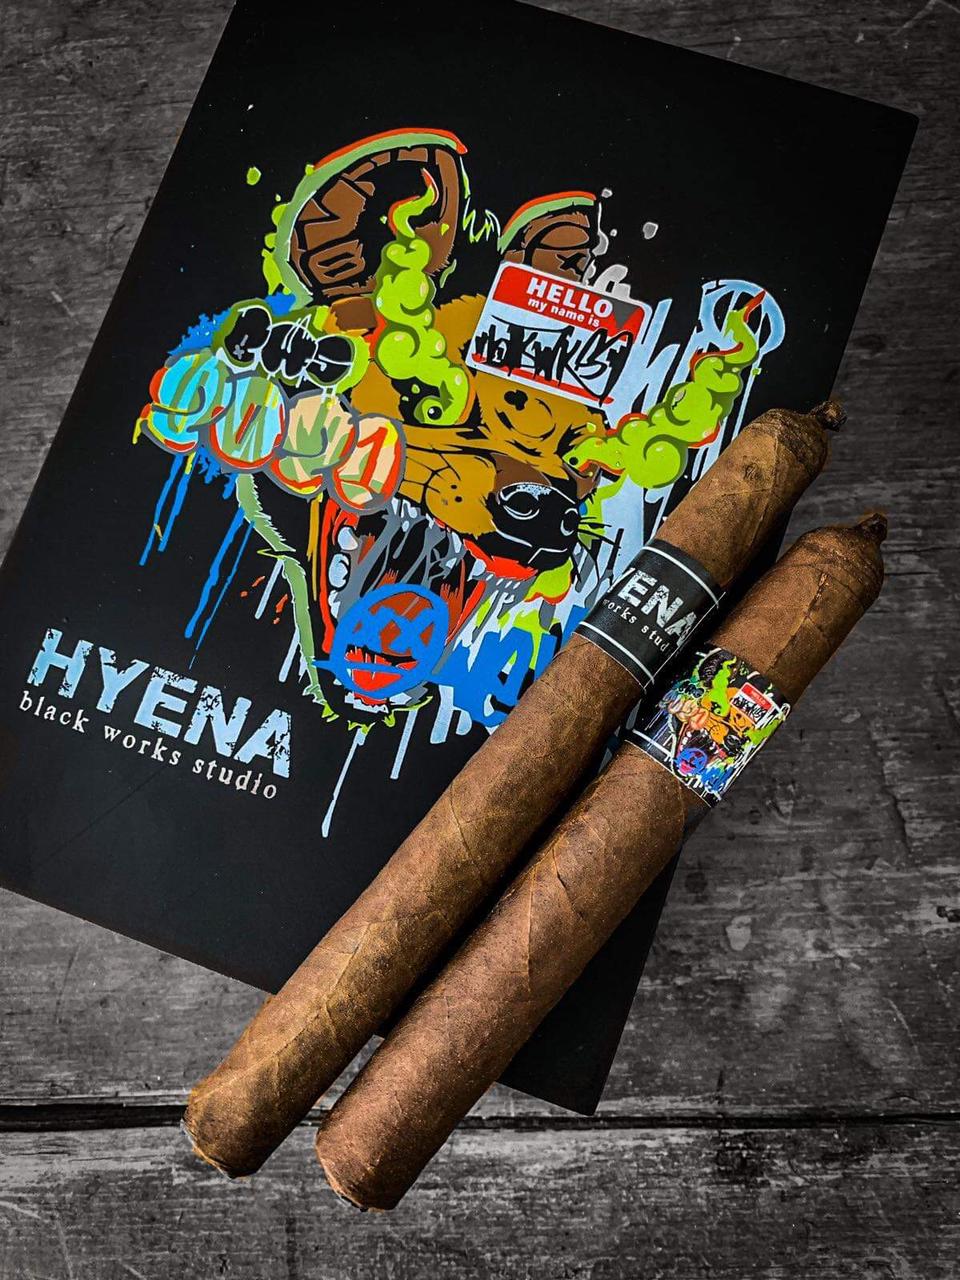 Black Works Studio (BLK WKS) Announces Release of Hyena